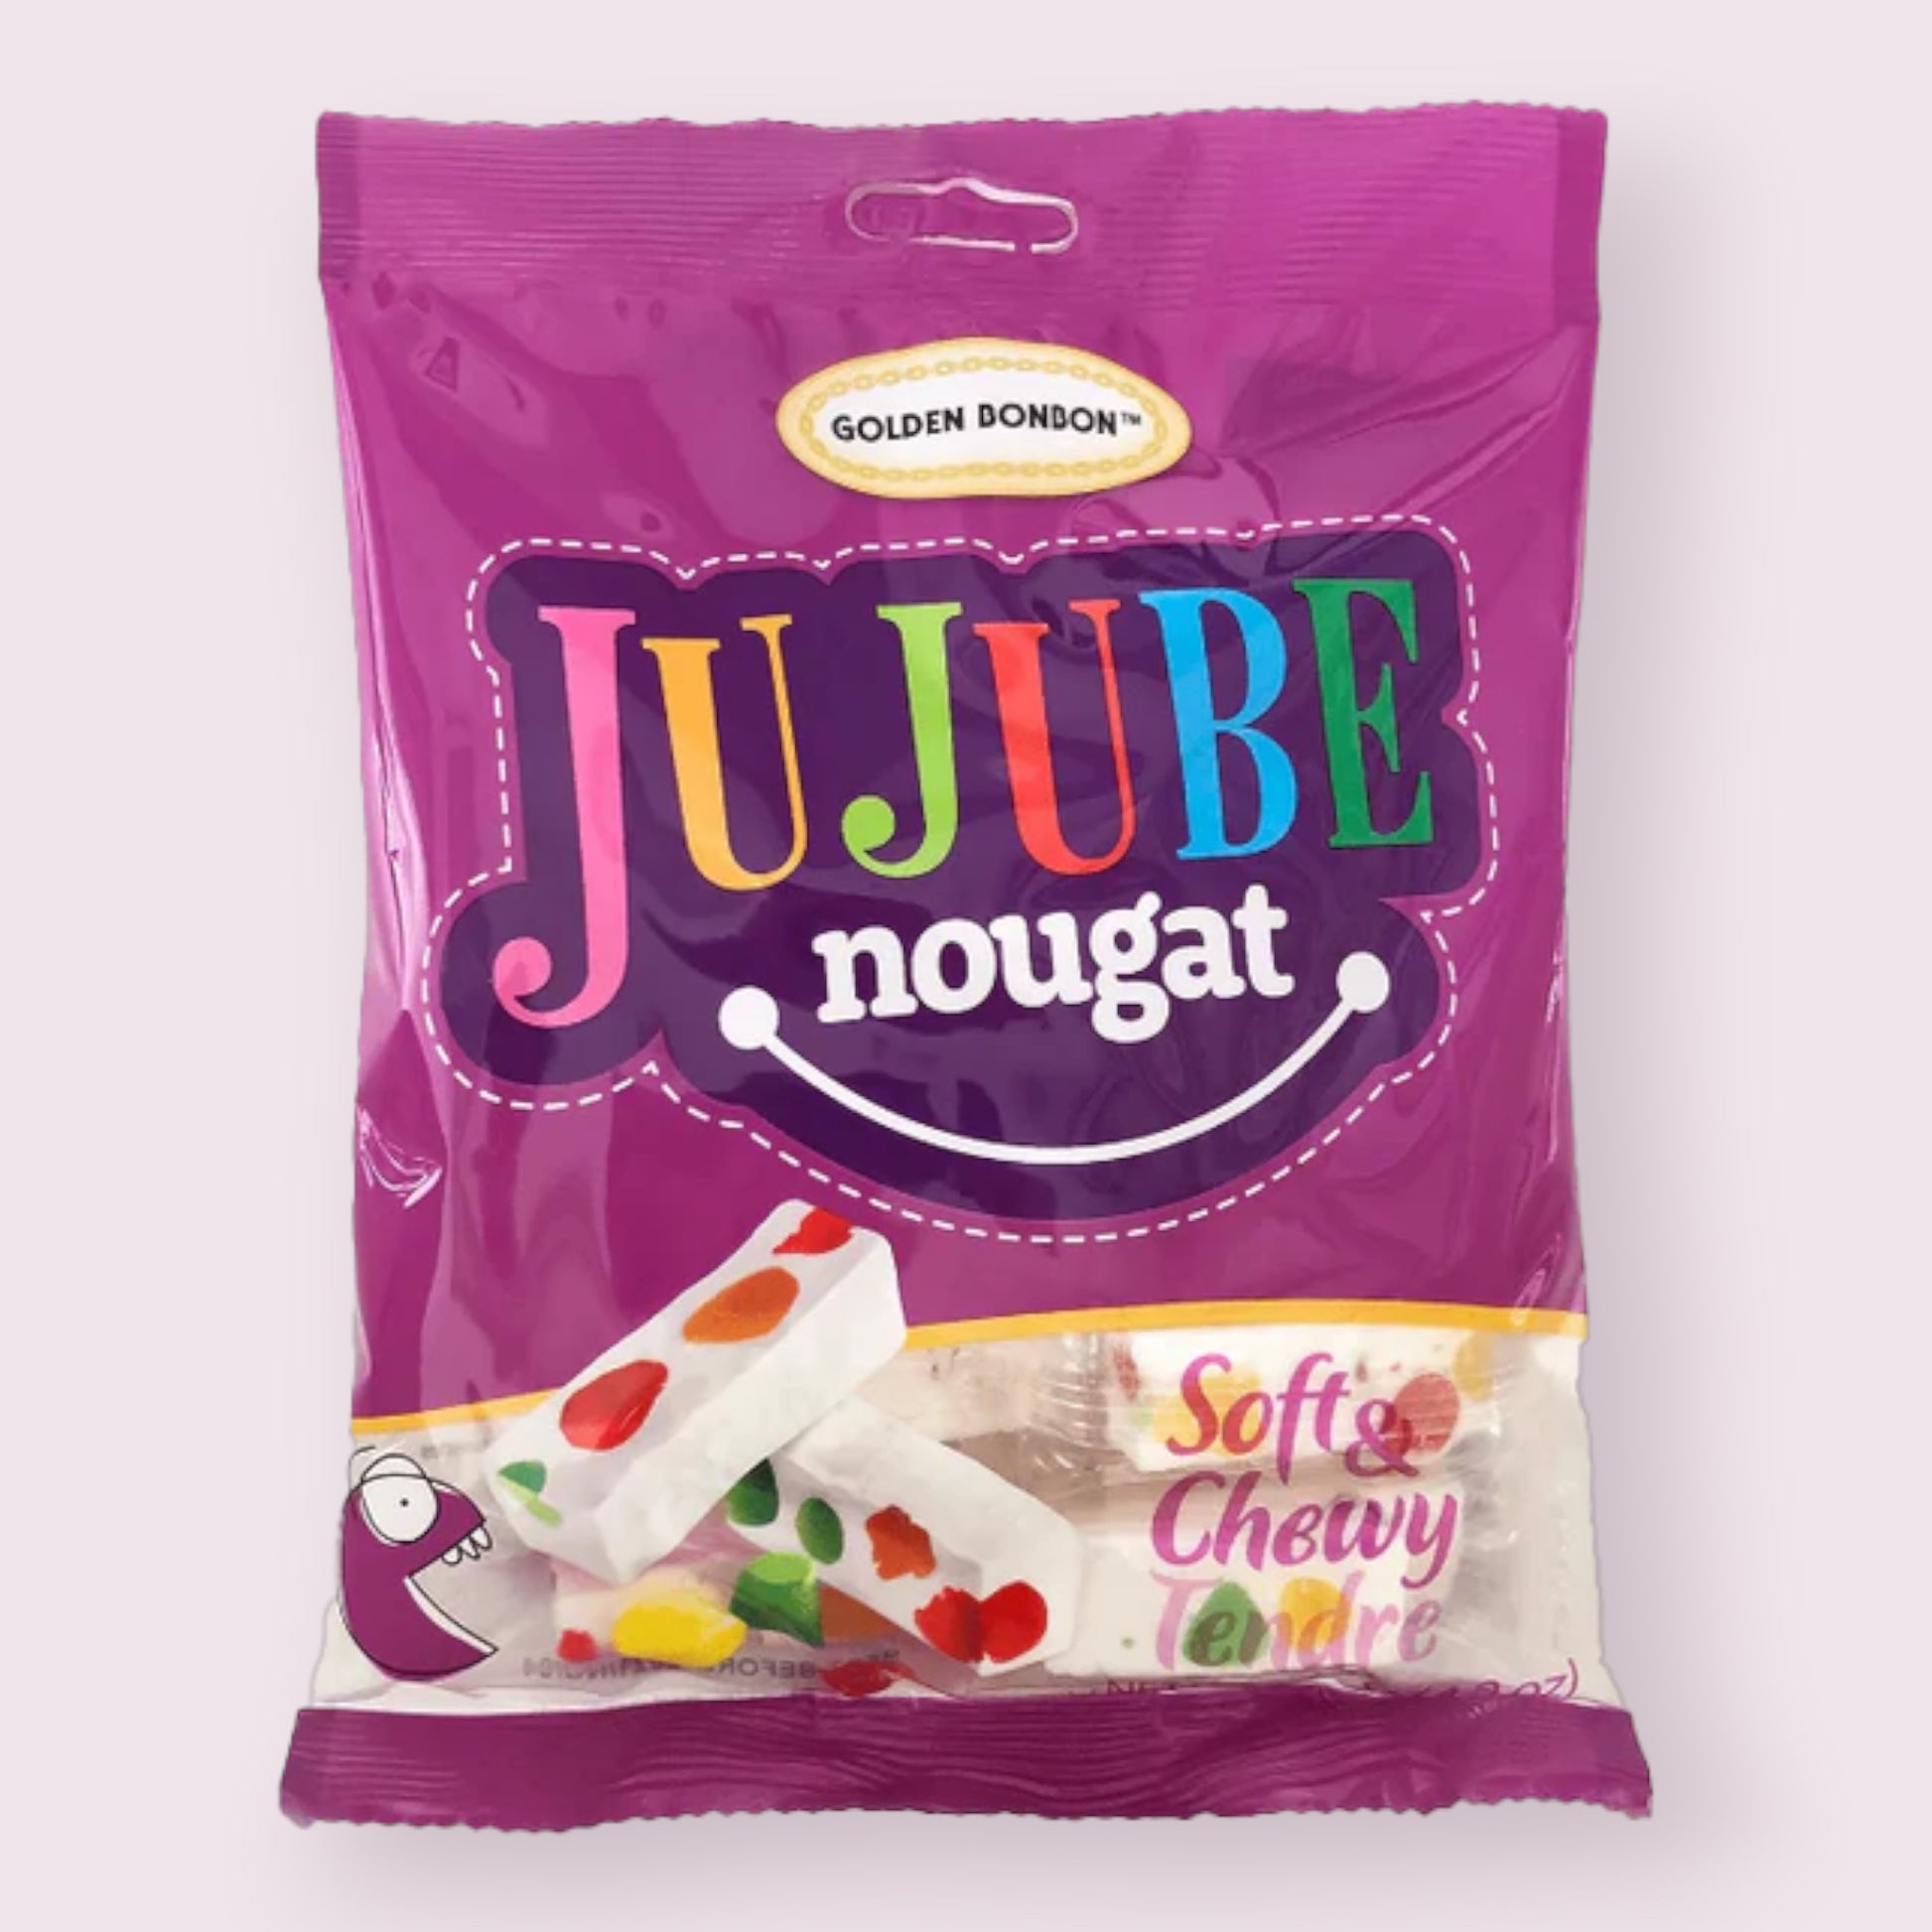 Golden Bonbon Jujube Nougat Bag nougat Pixie Candy Shoppe   